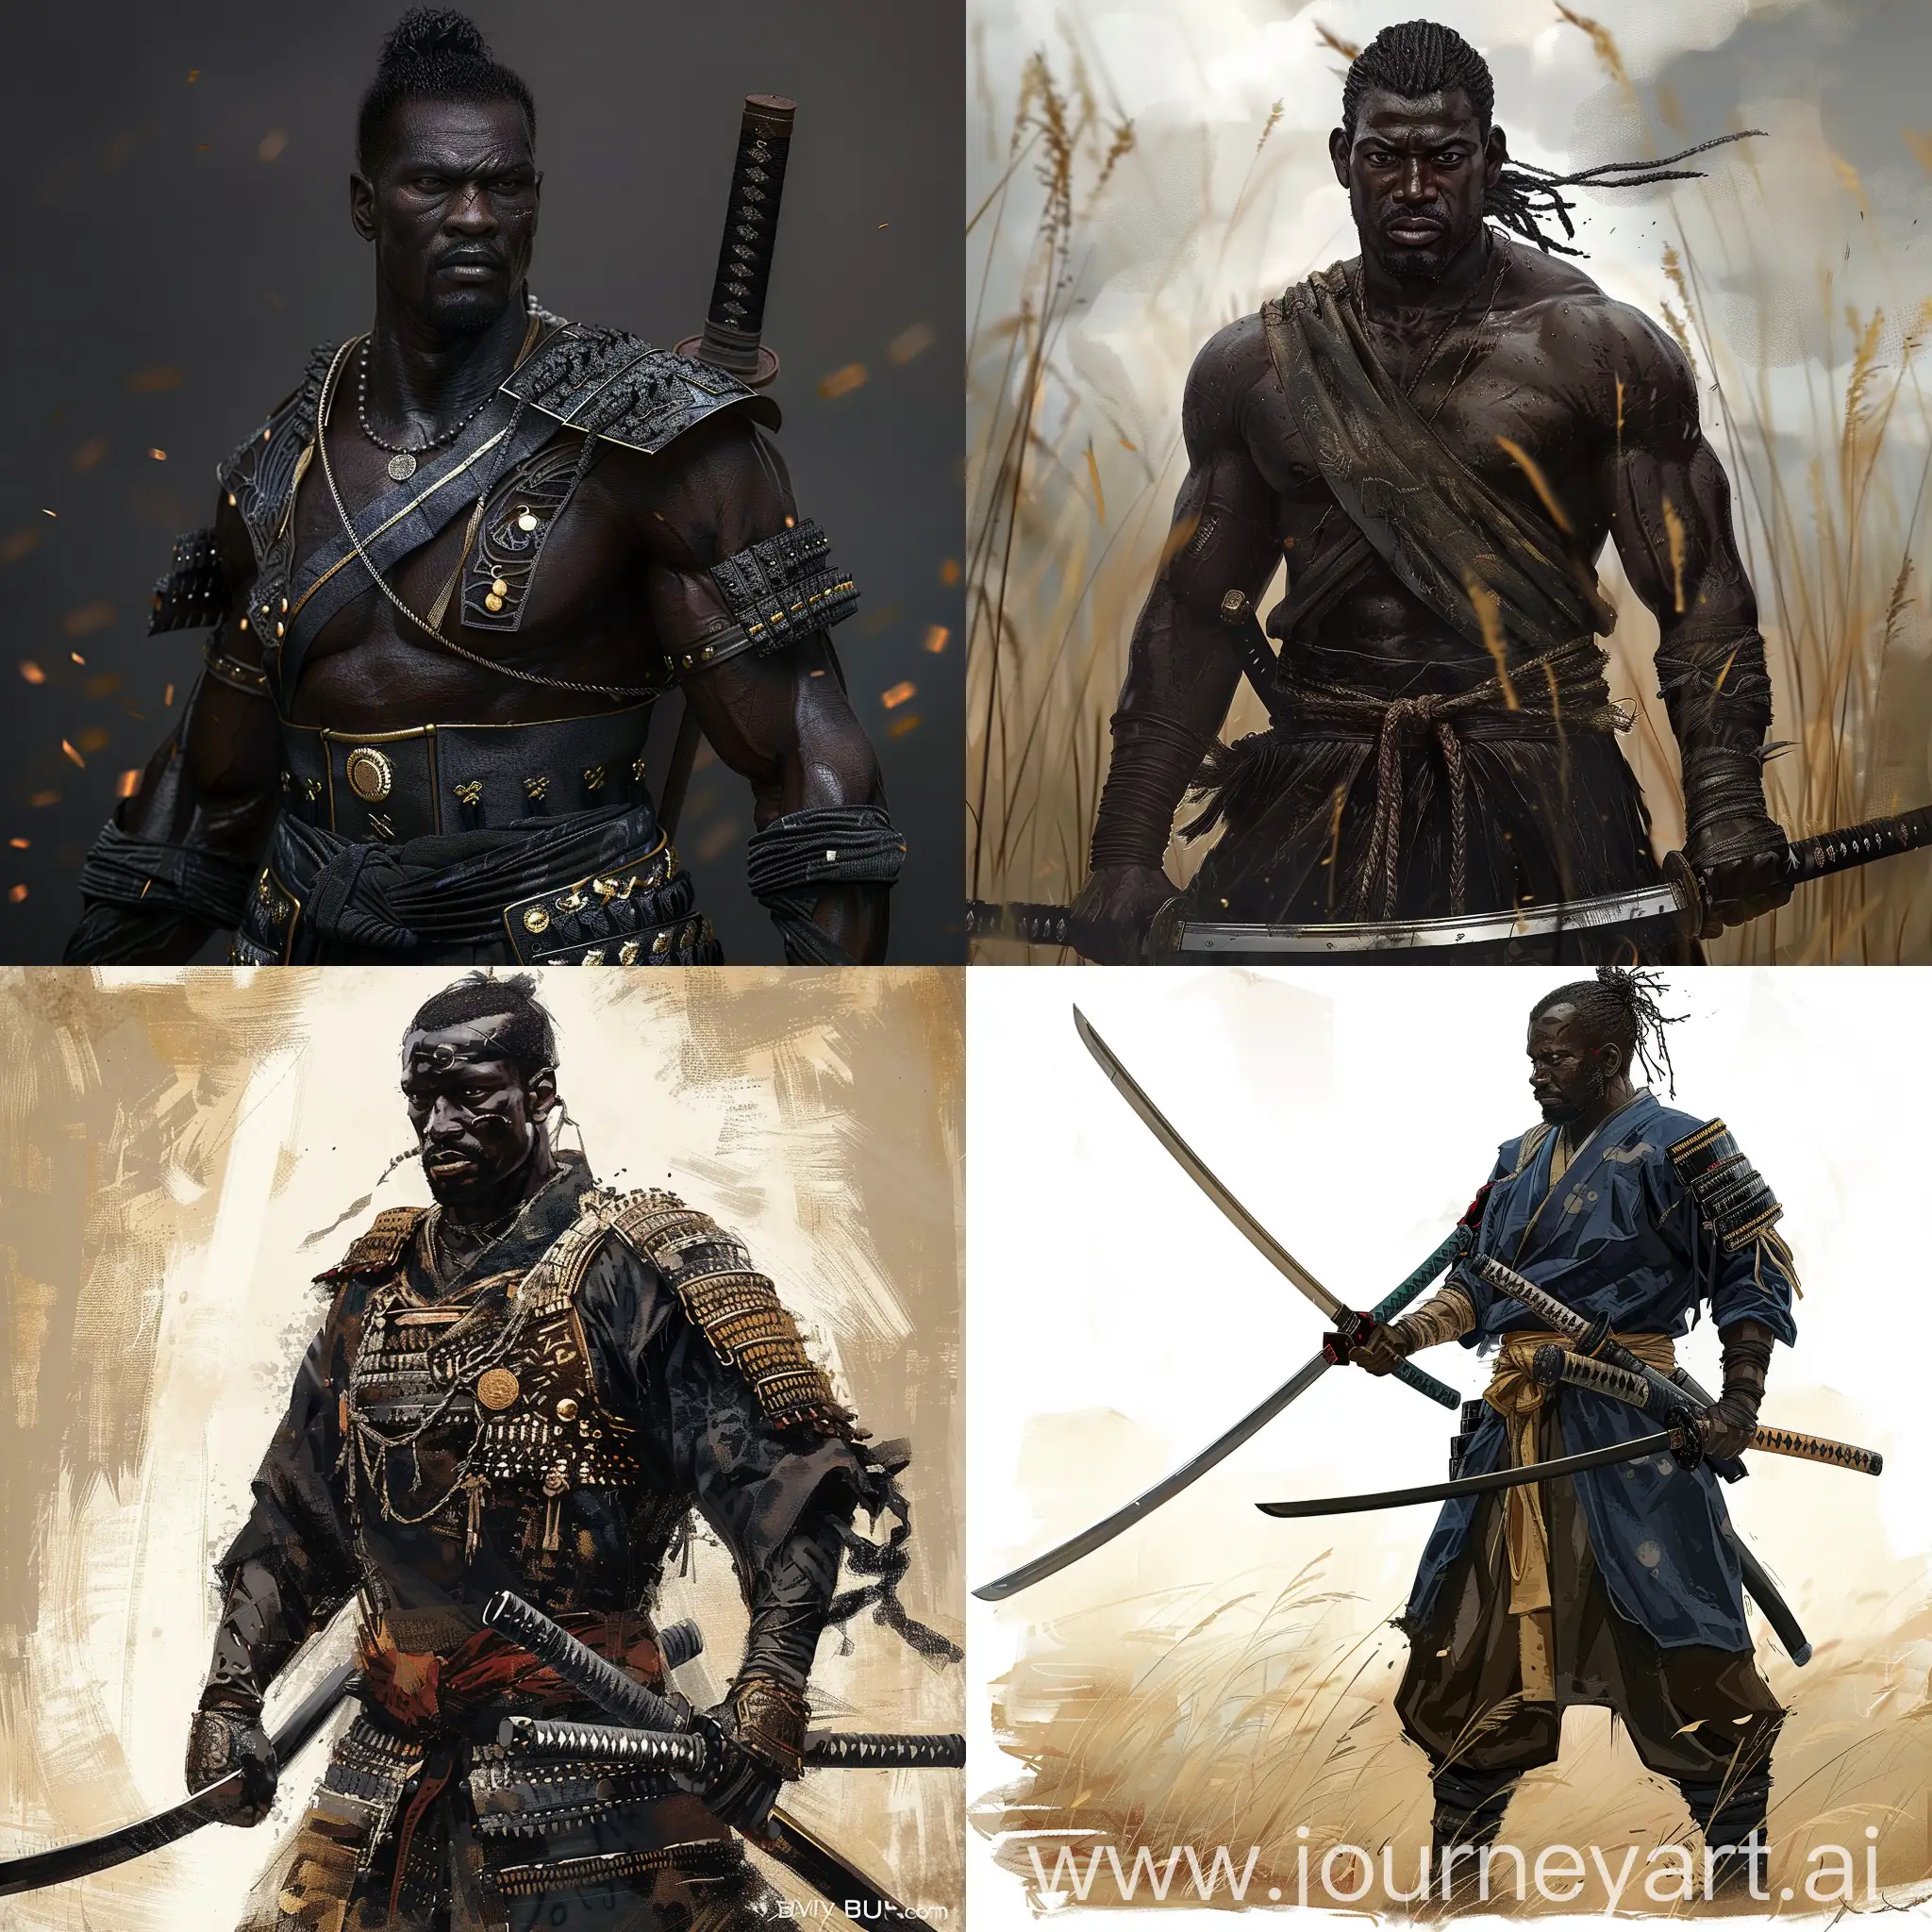 Strong, African, samurai